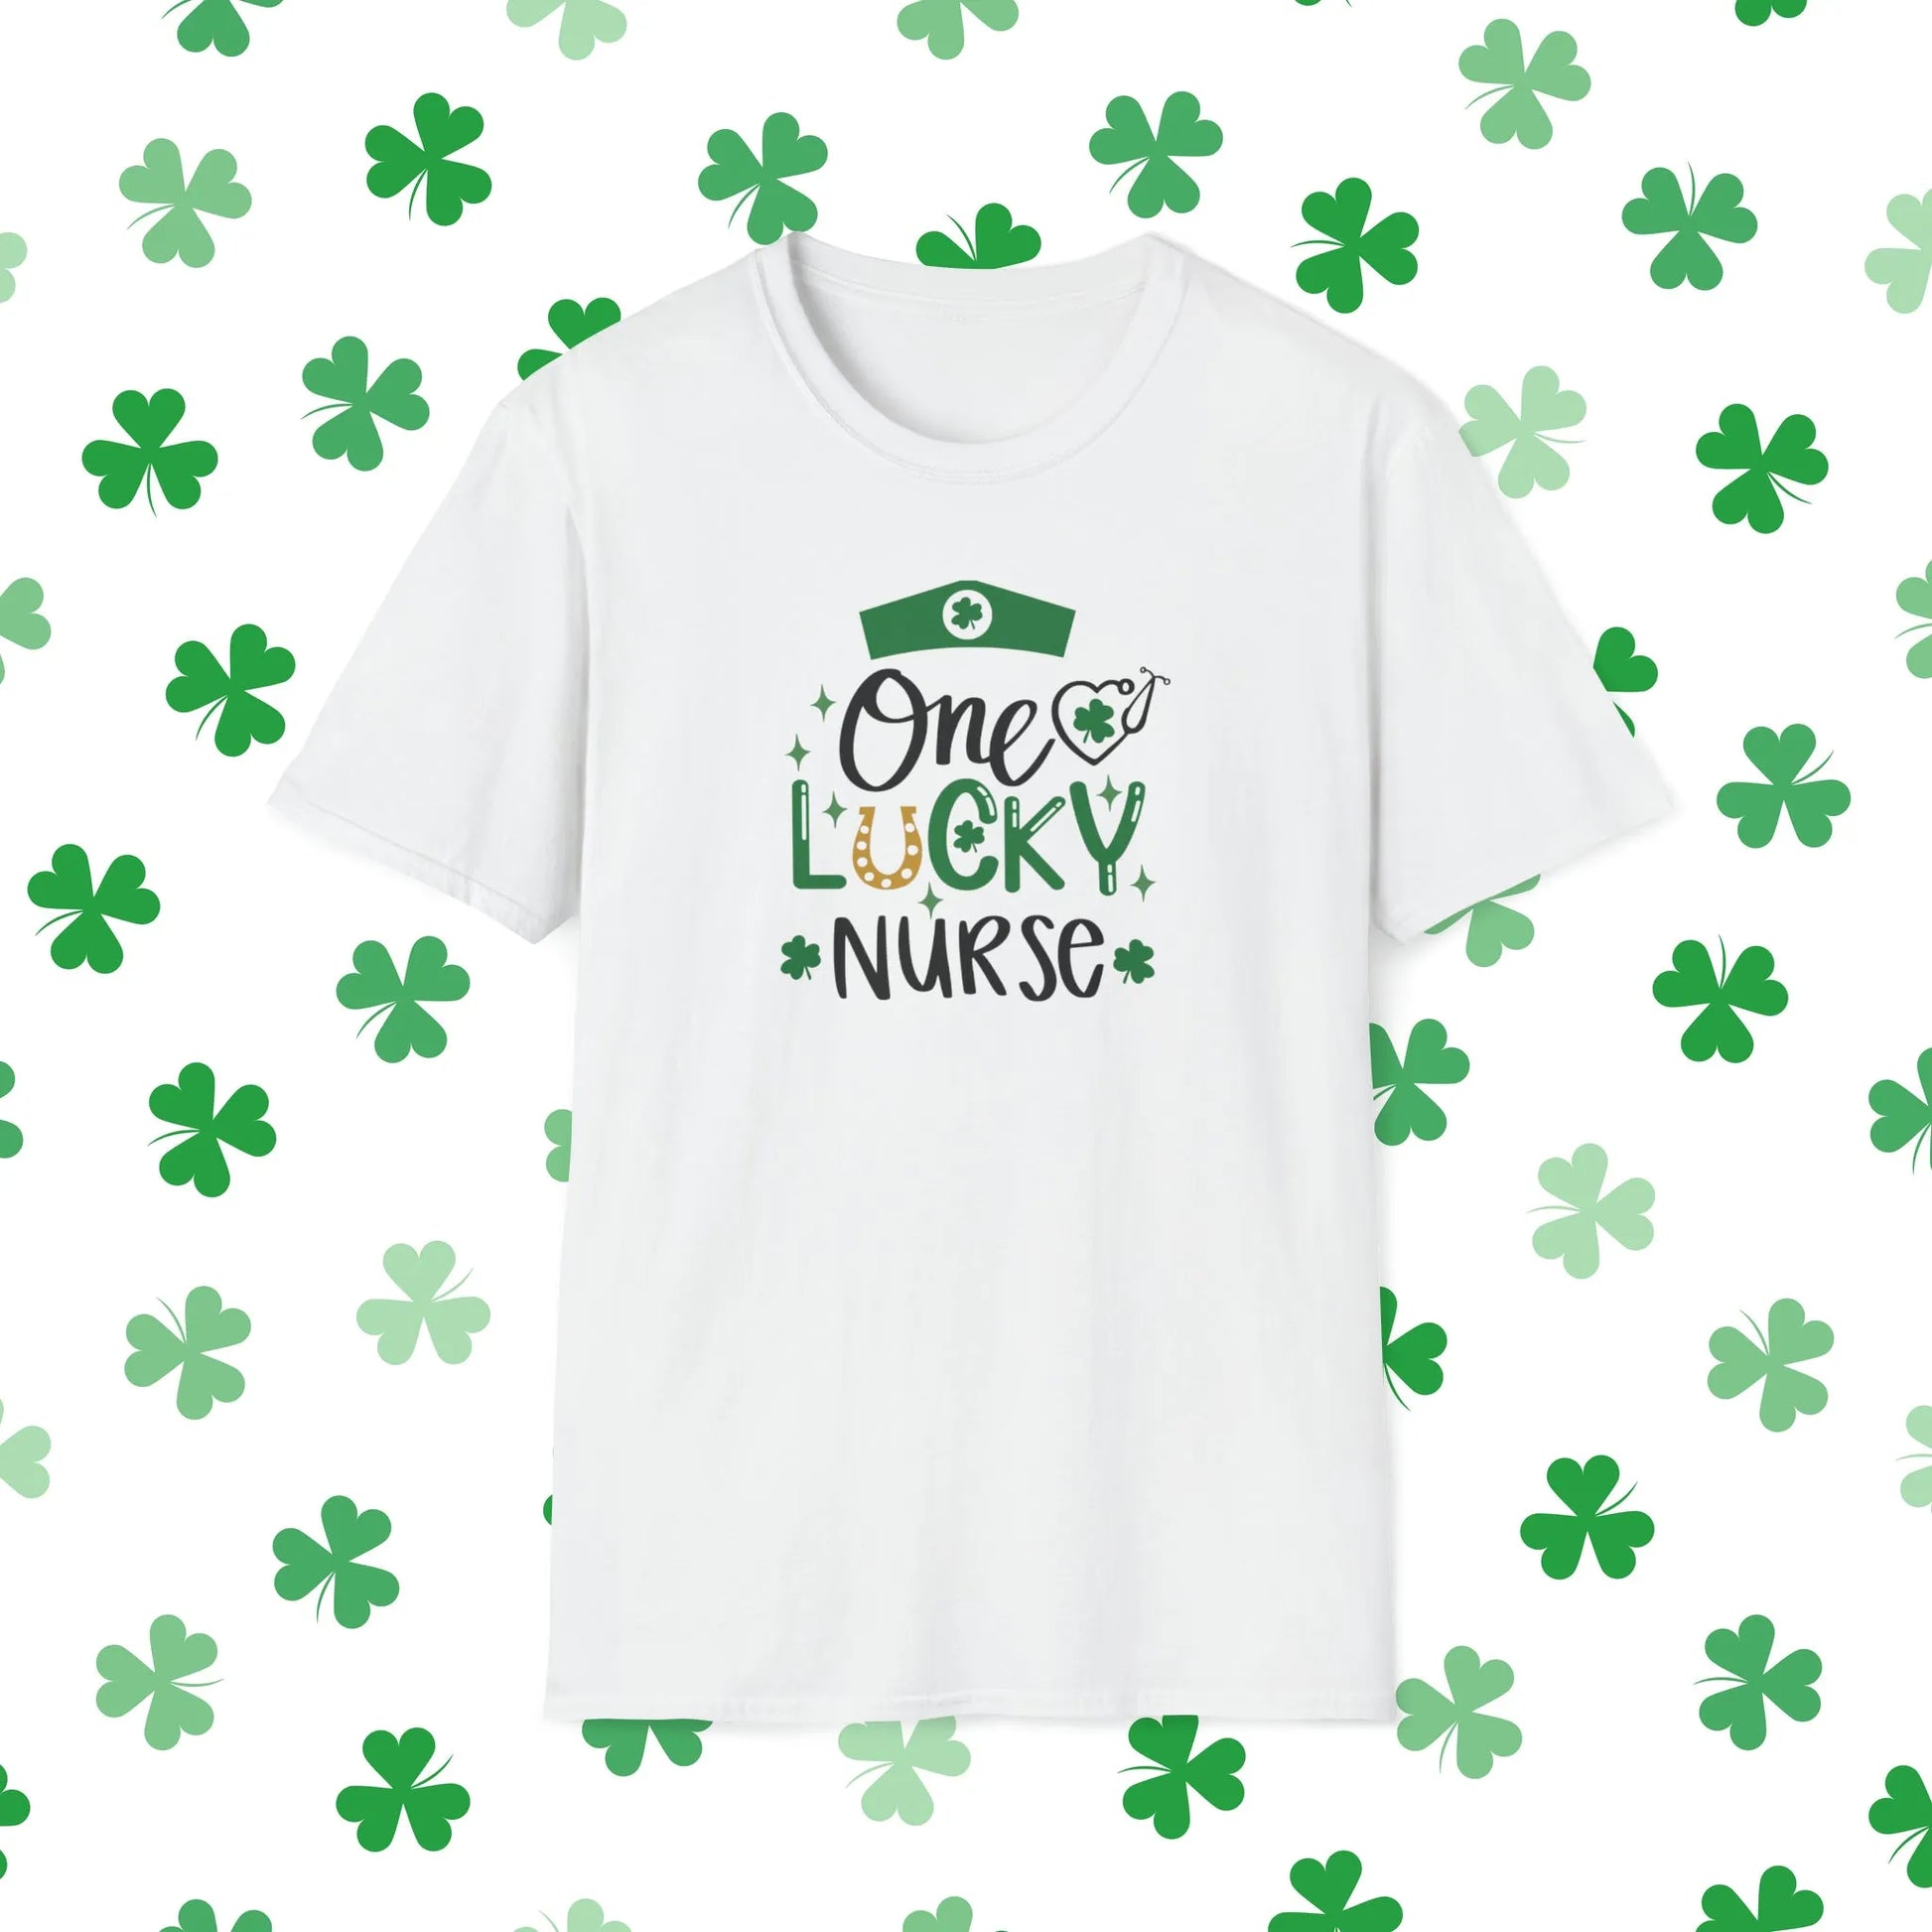 One Lucky Nurse St. Patrick's Day T-Shirt - Comfort & Charm - One Lucky Nurse Shirt